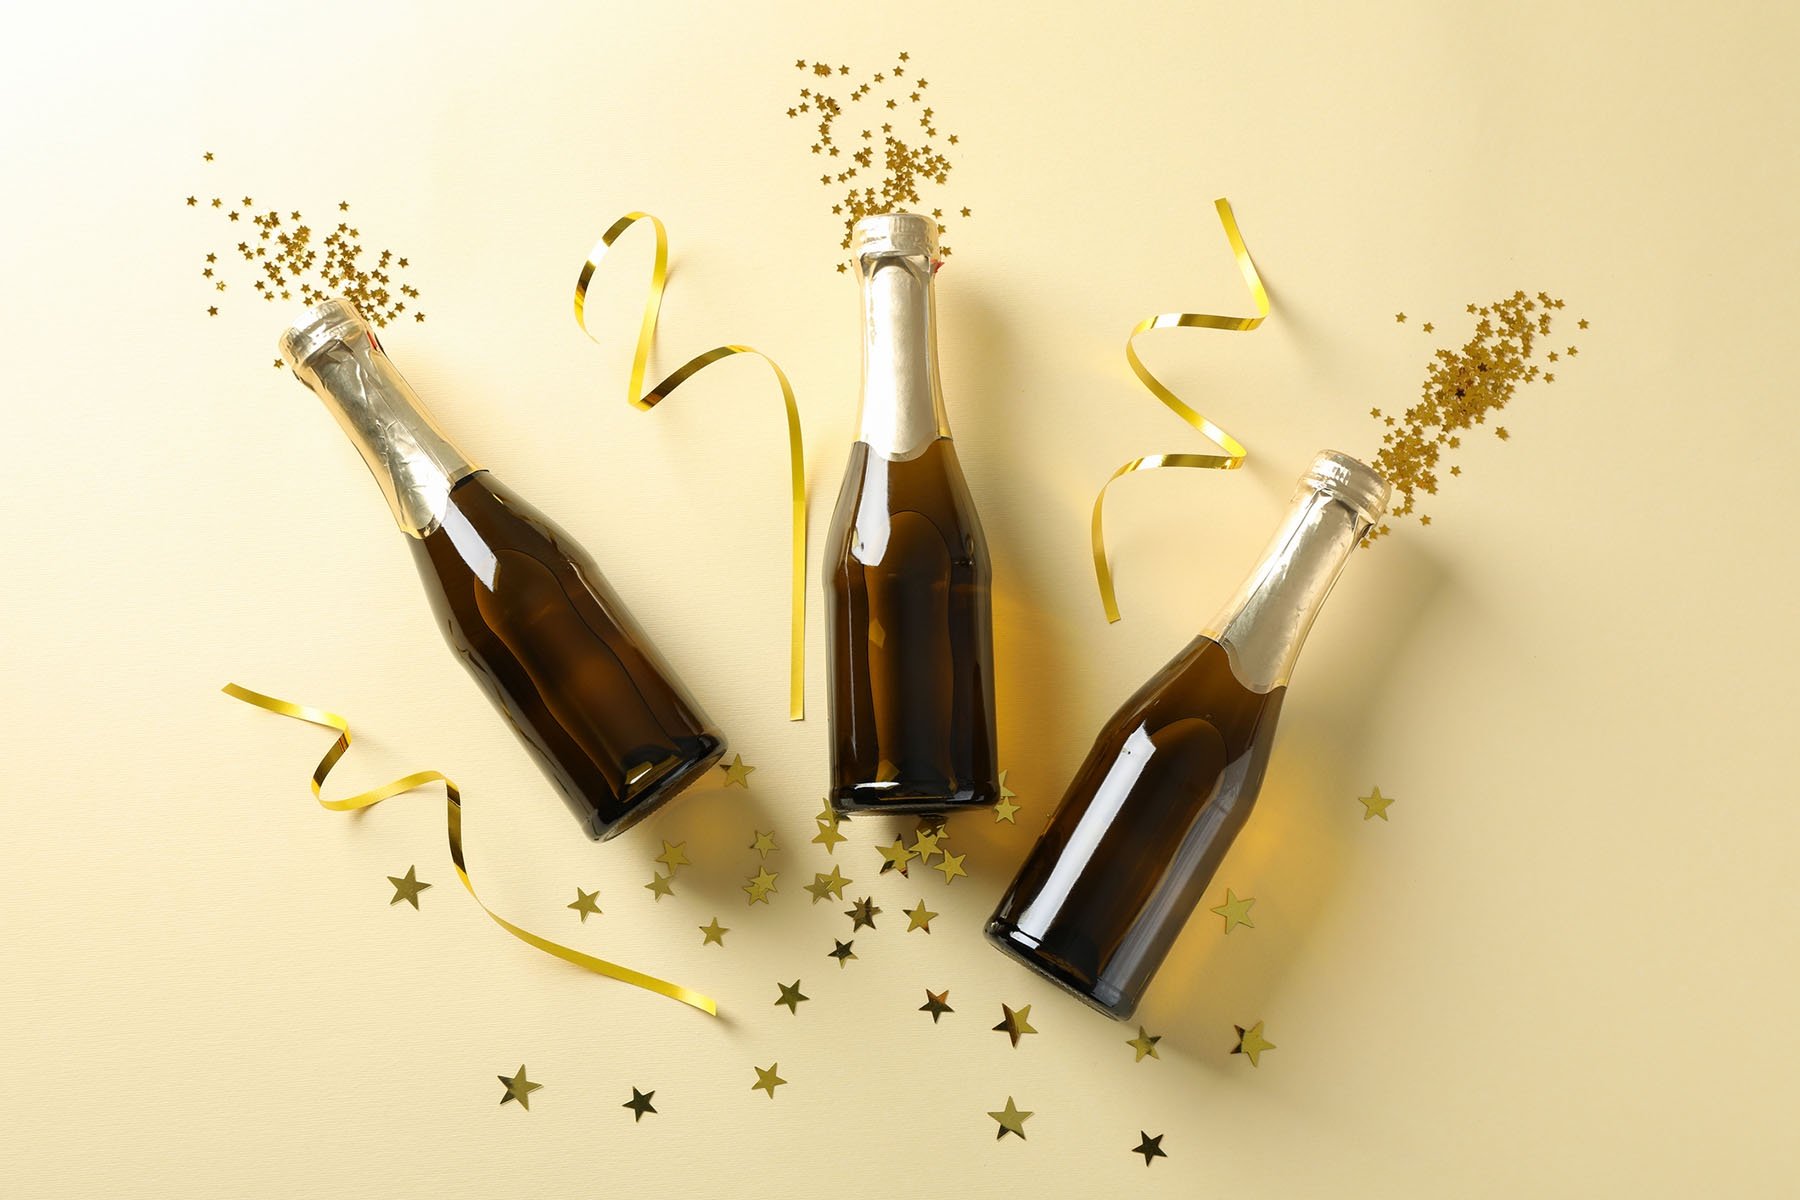 https://www.totalwine.com/site/binaries/t1646699372277/content/gallery/data-axle/0096-mini-champagne-bottles/mini_champagne-bottles-new-years.jpg